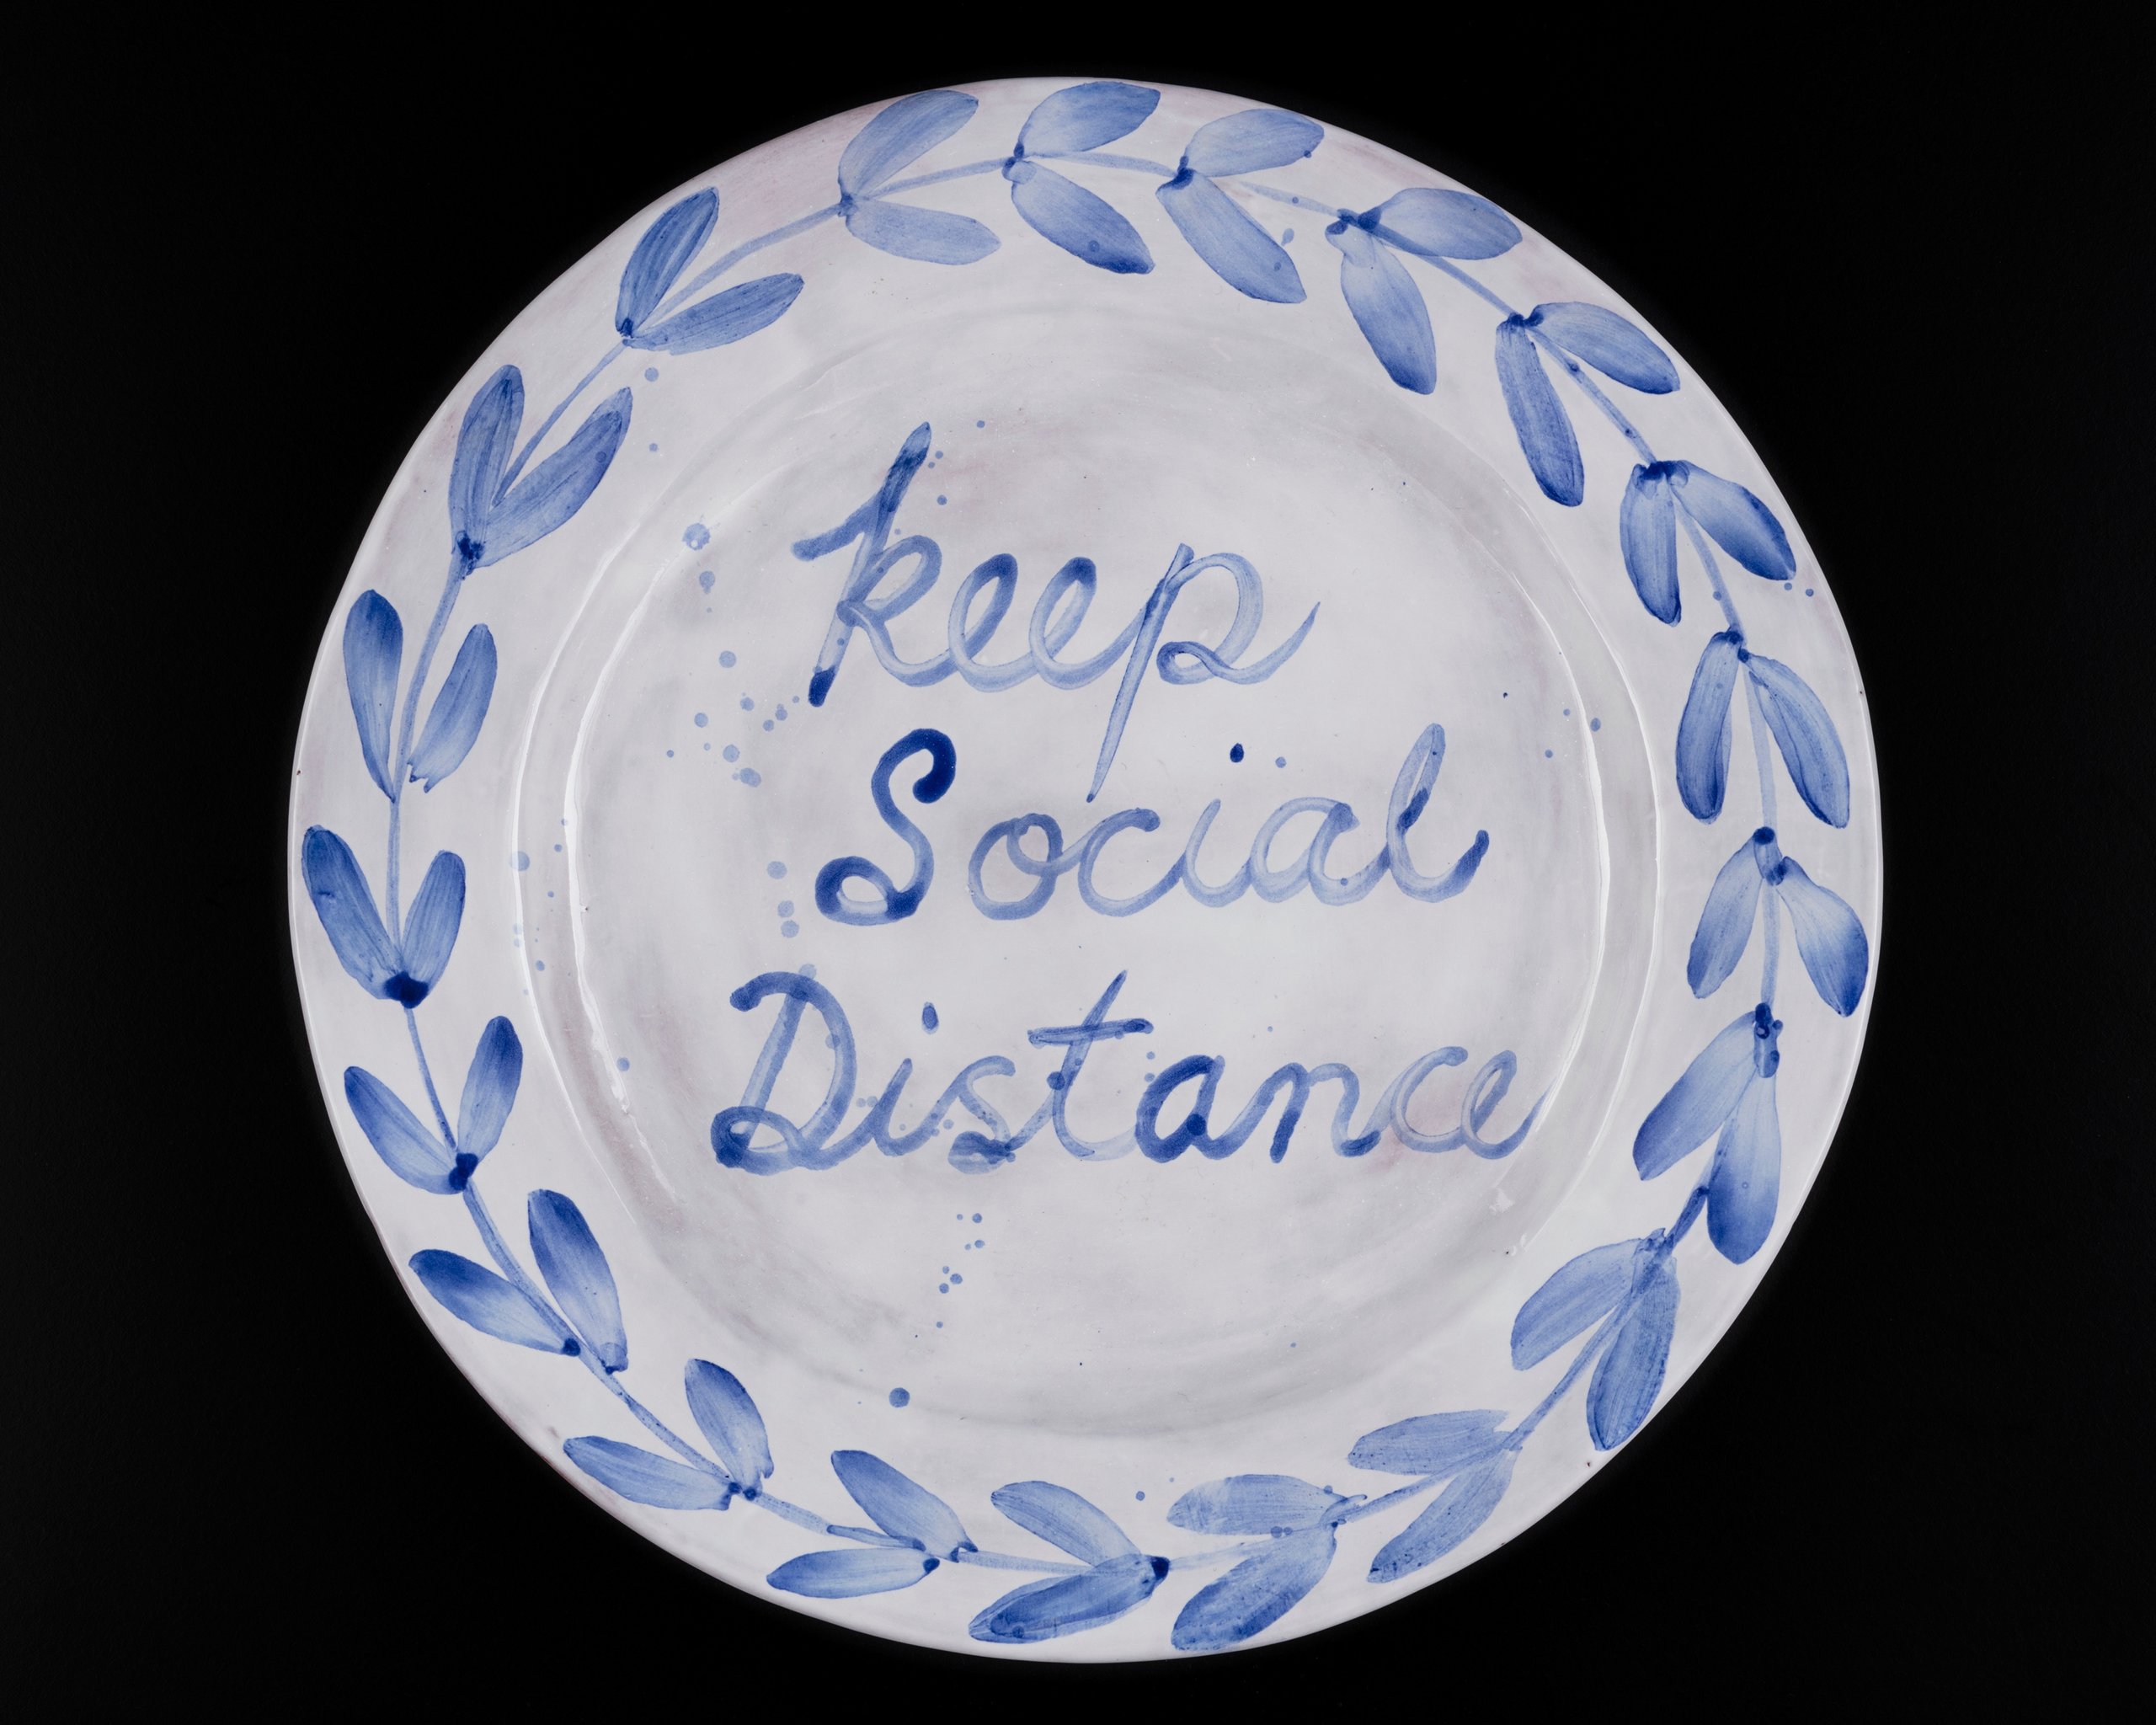 'Keep Social Distance' by Sassy Park